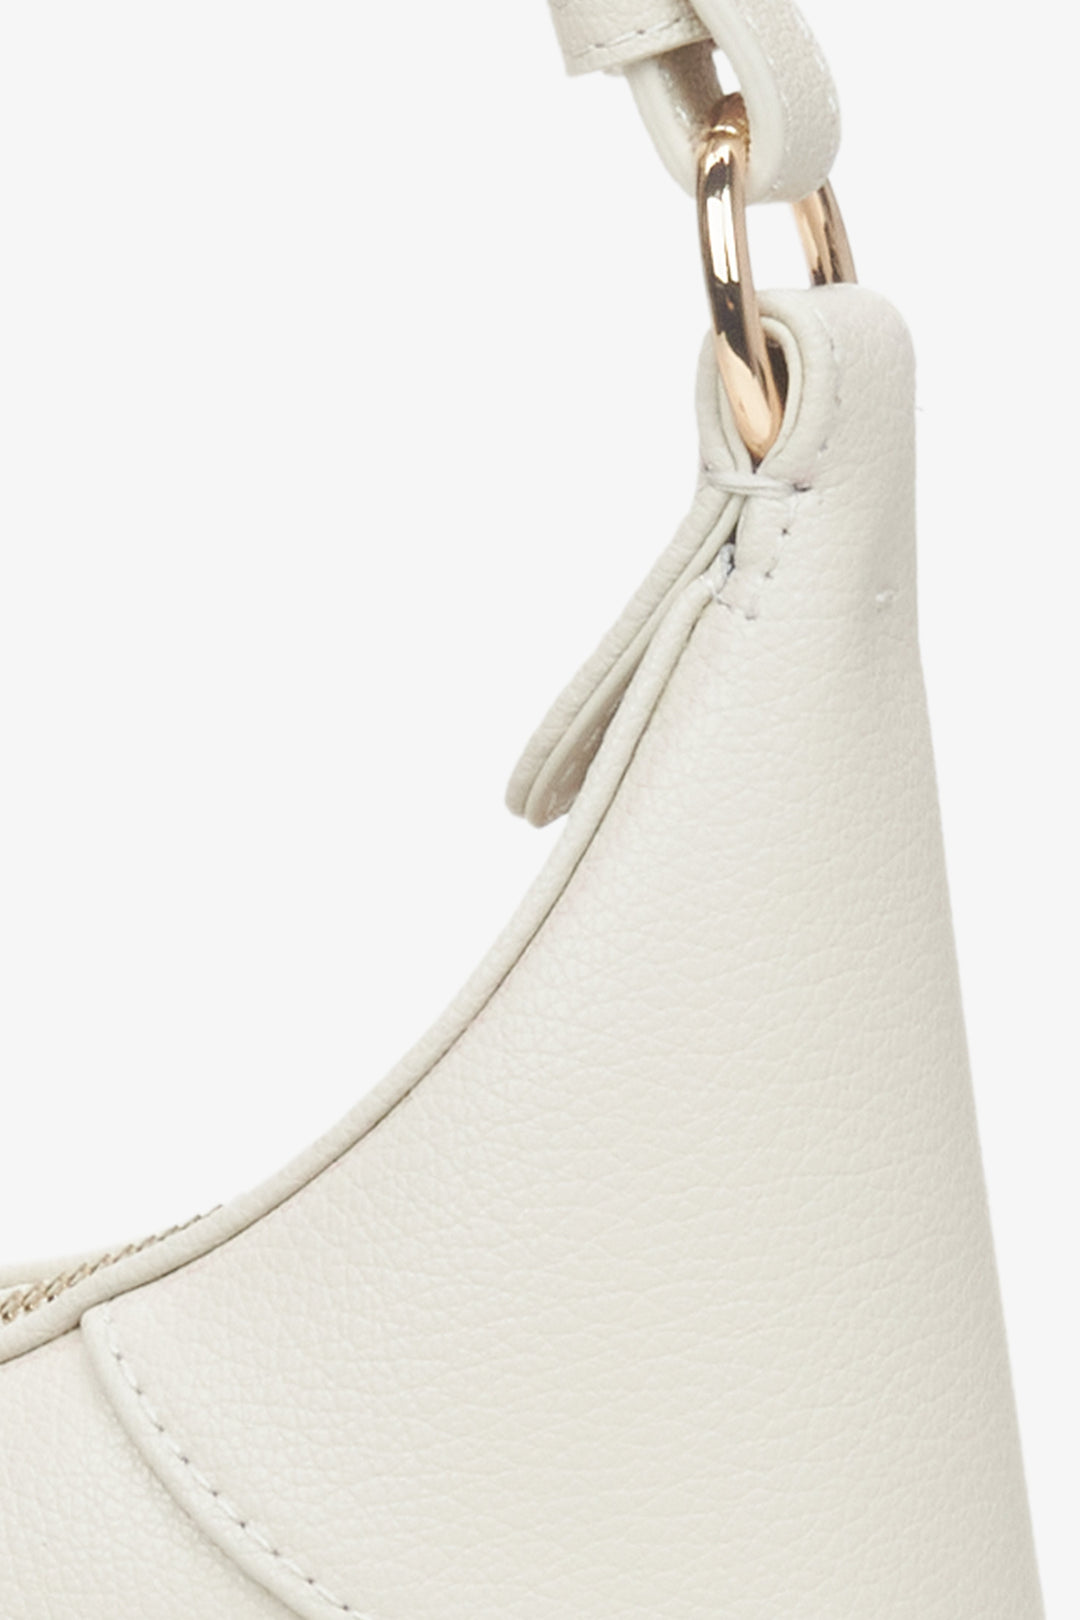 Women's cream beige leather handbag - a close-up on details.